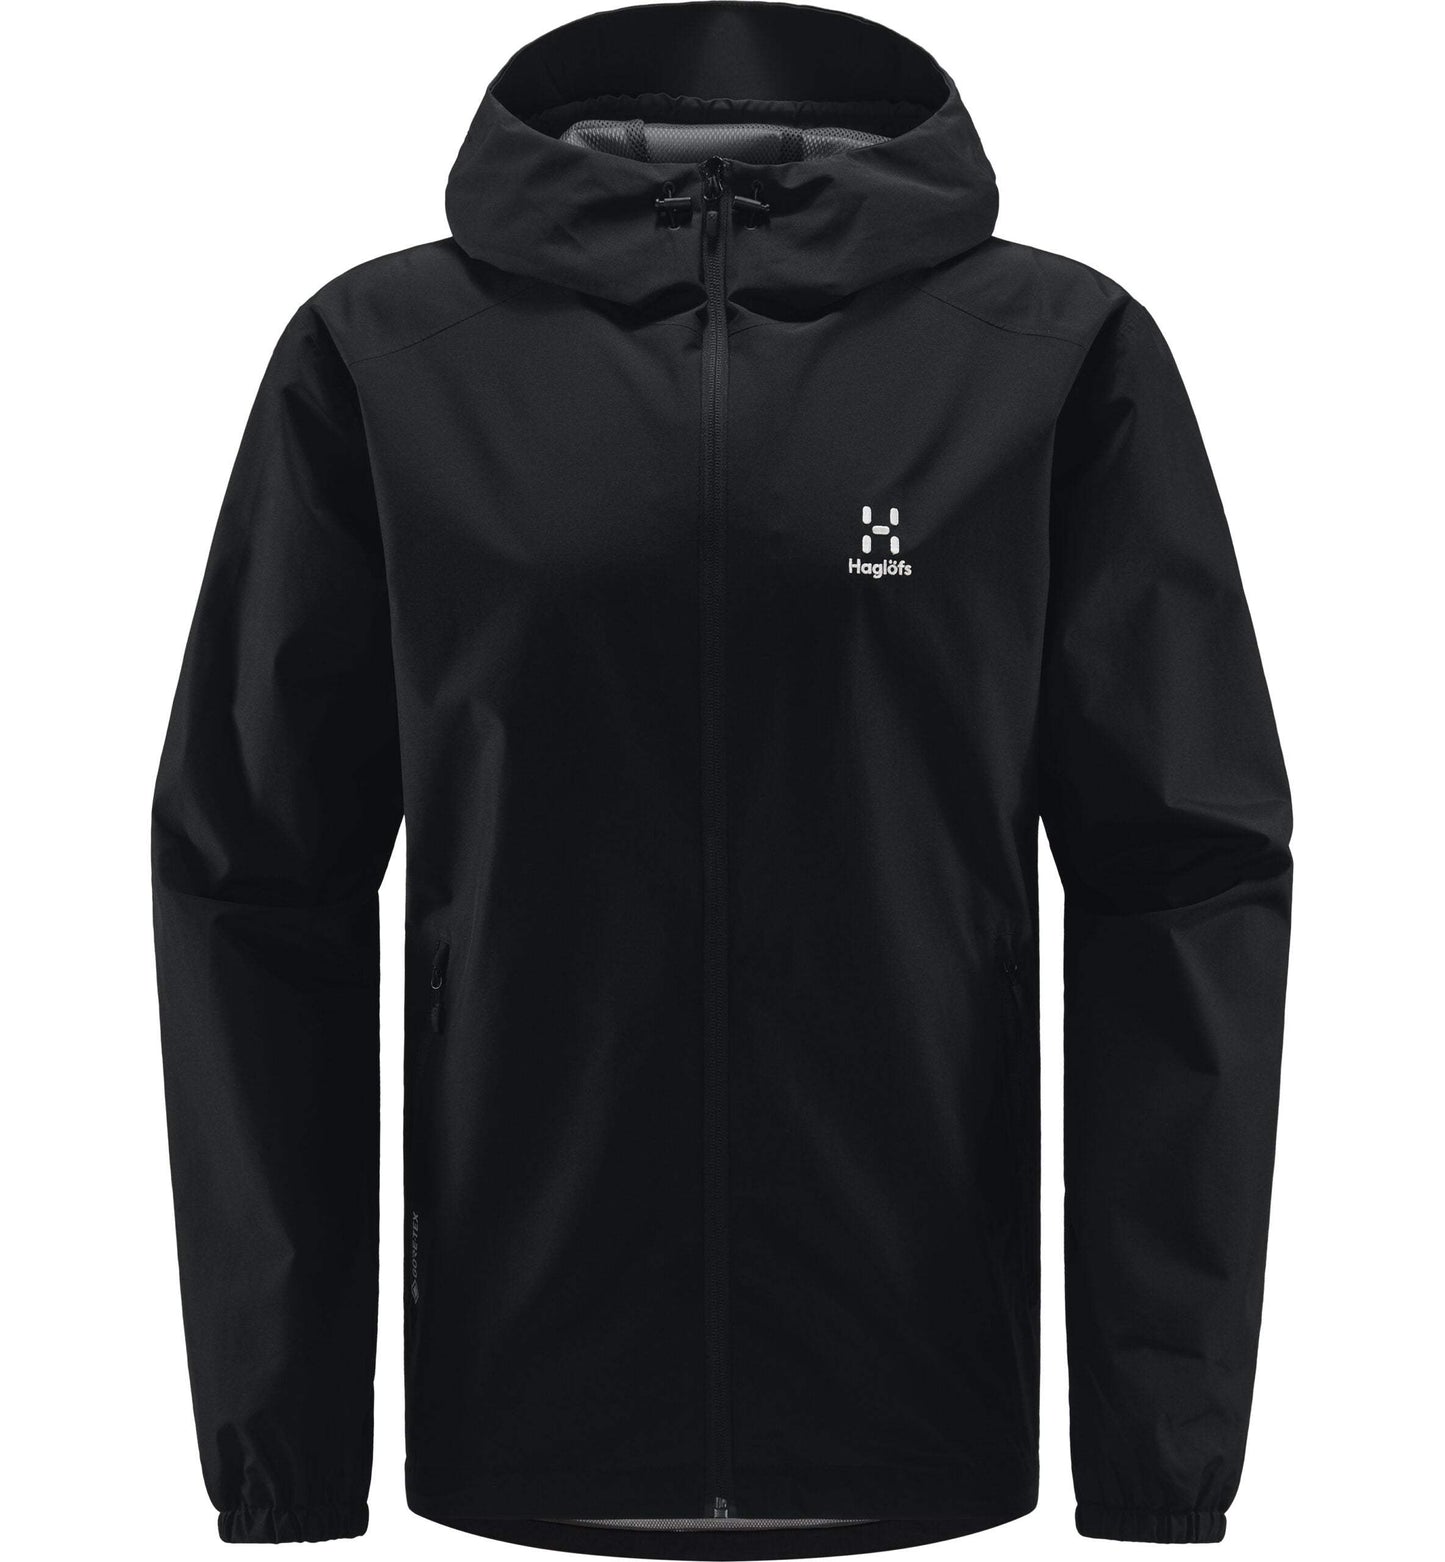 Haglofs Men’s Betula GTX Jacket - The Luxury Promotional Gifts Company Limited